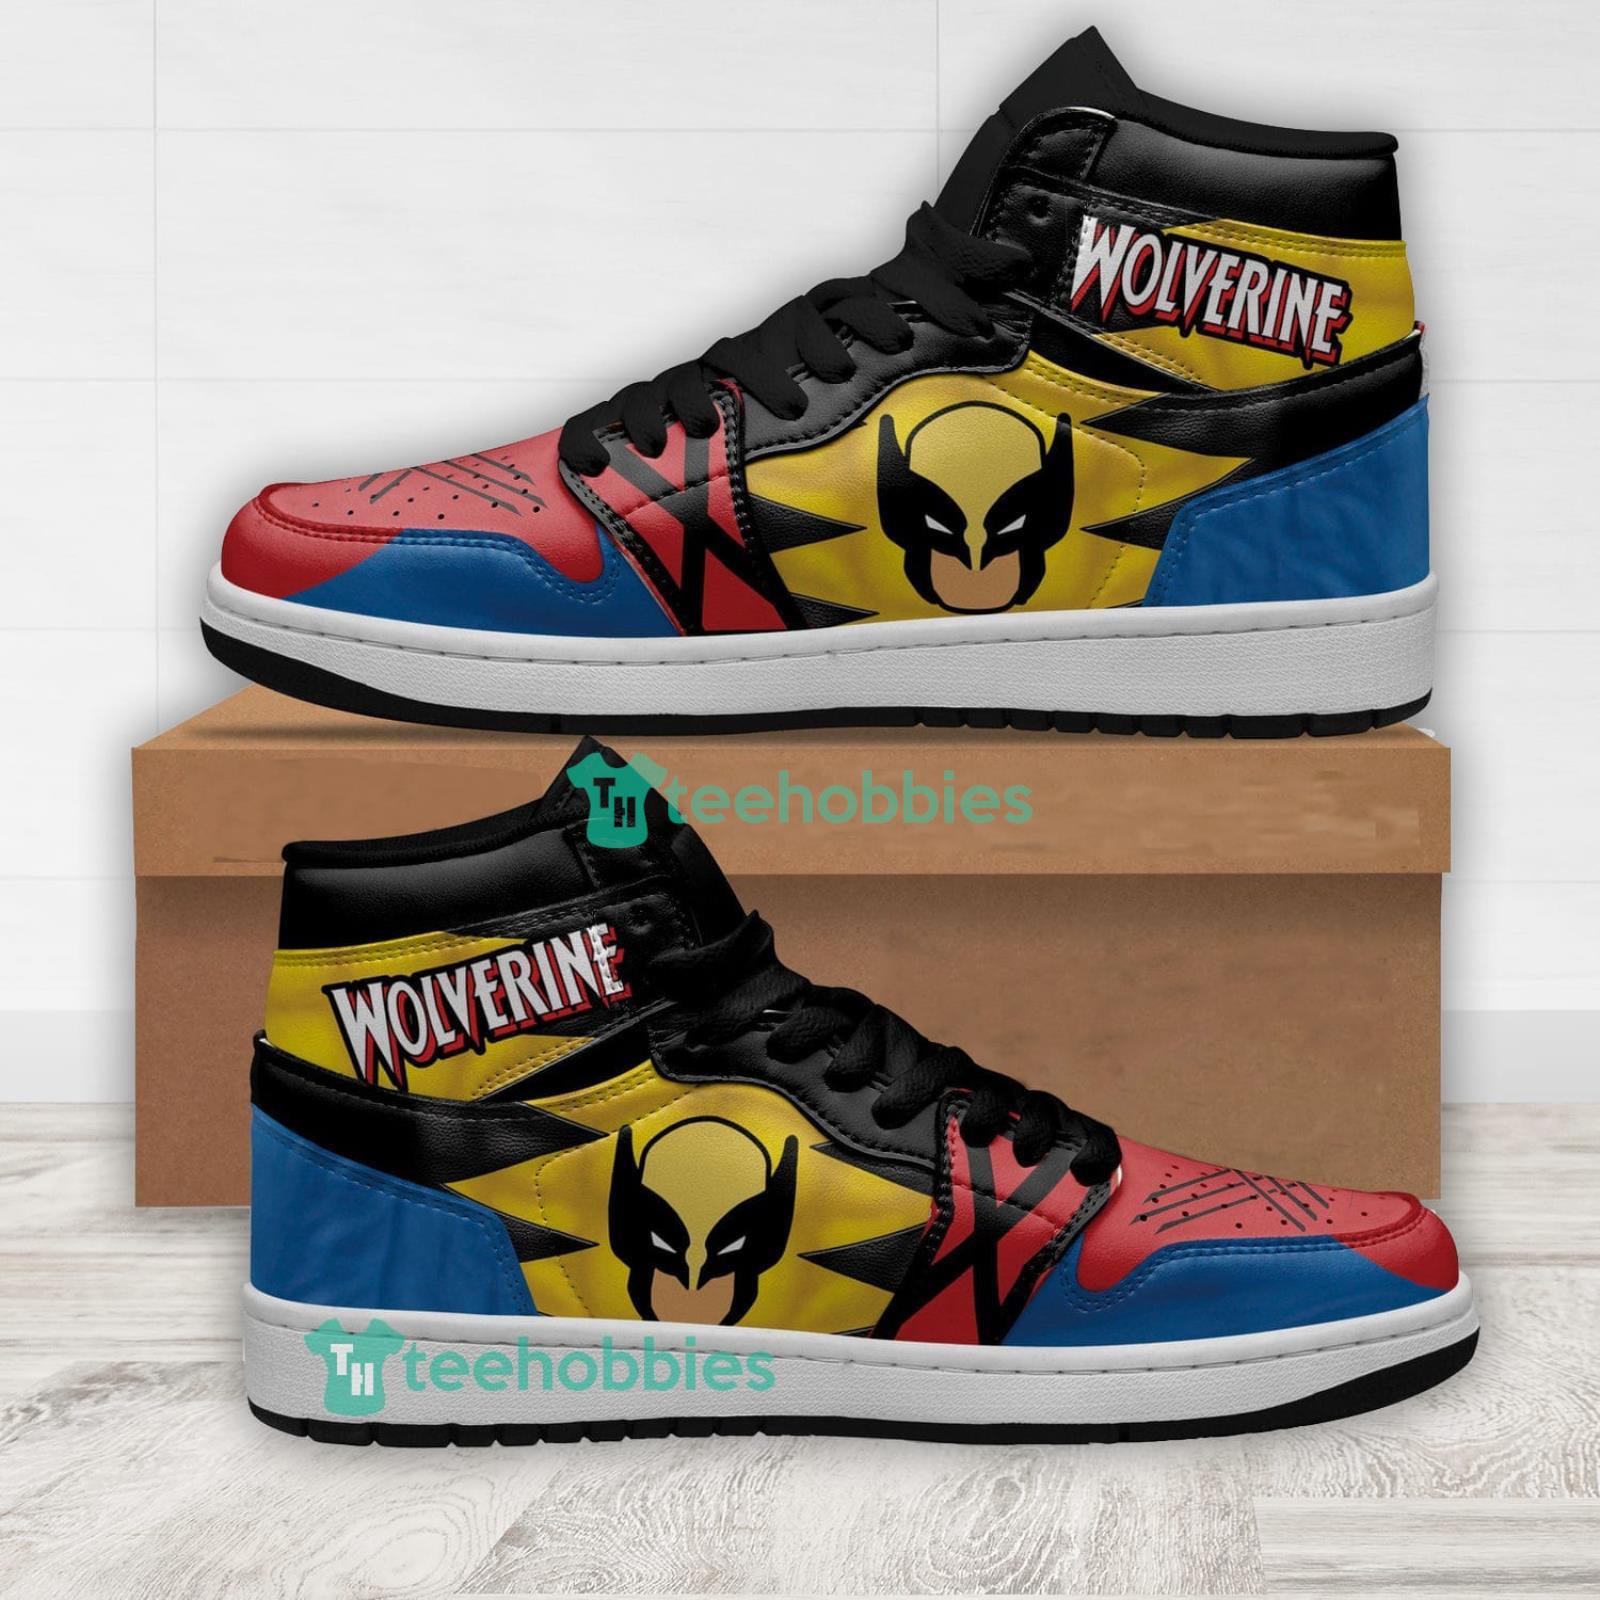 Wolverine Air Jordan Hightop Shoes Sneakers For Men And Women Super Heroes Sneakers Product Photo 1